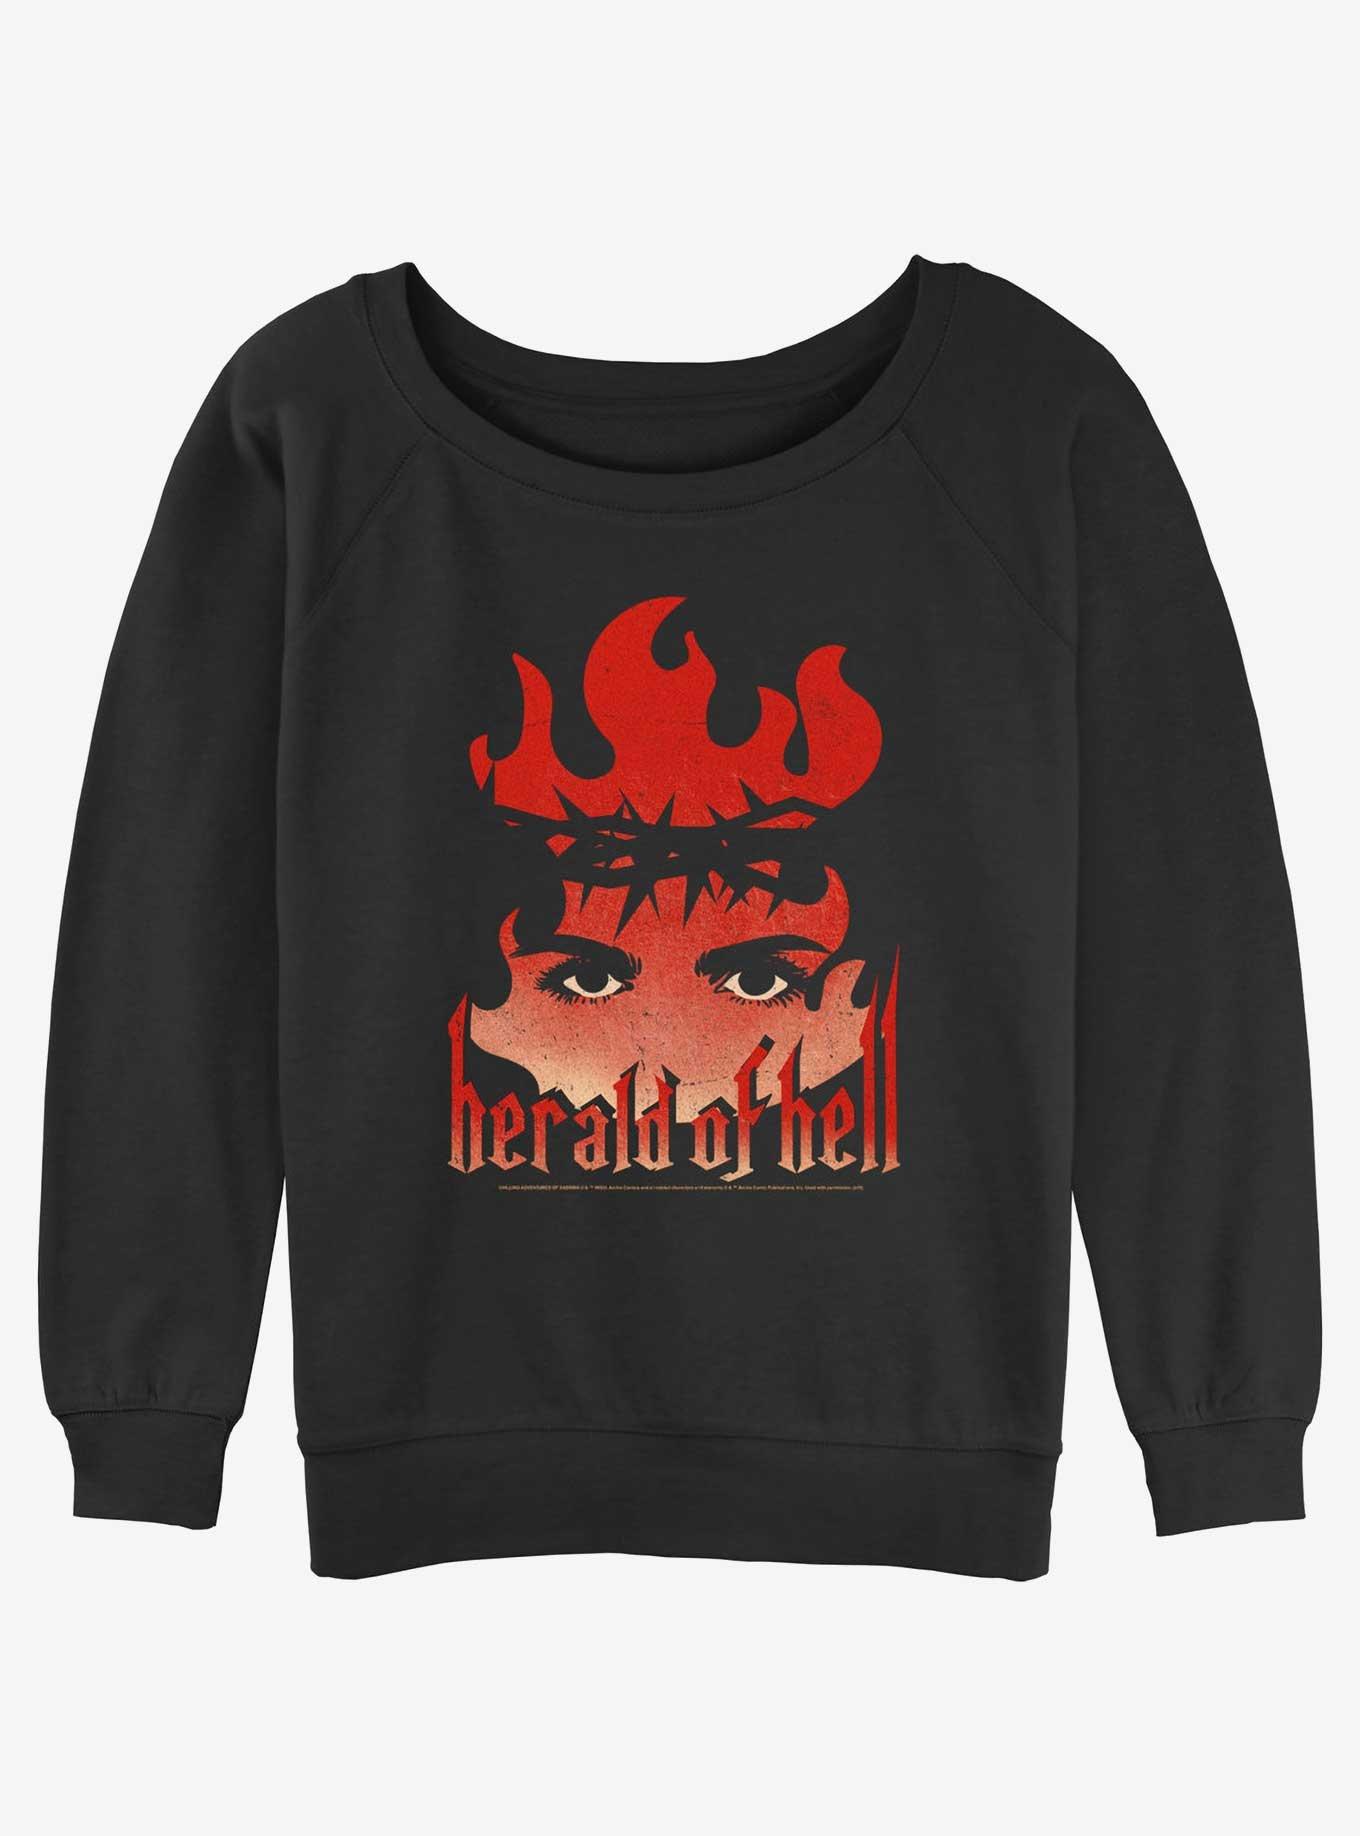 Chilling Adventures of Sabrina Herlad Of Hell Womens Slouchy Sweatshirt, BLACK, hi-res